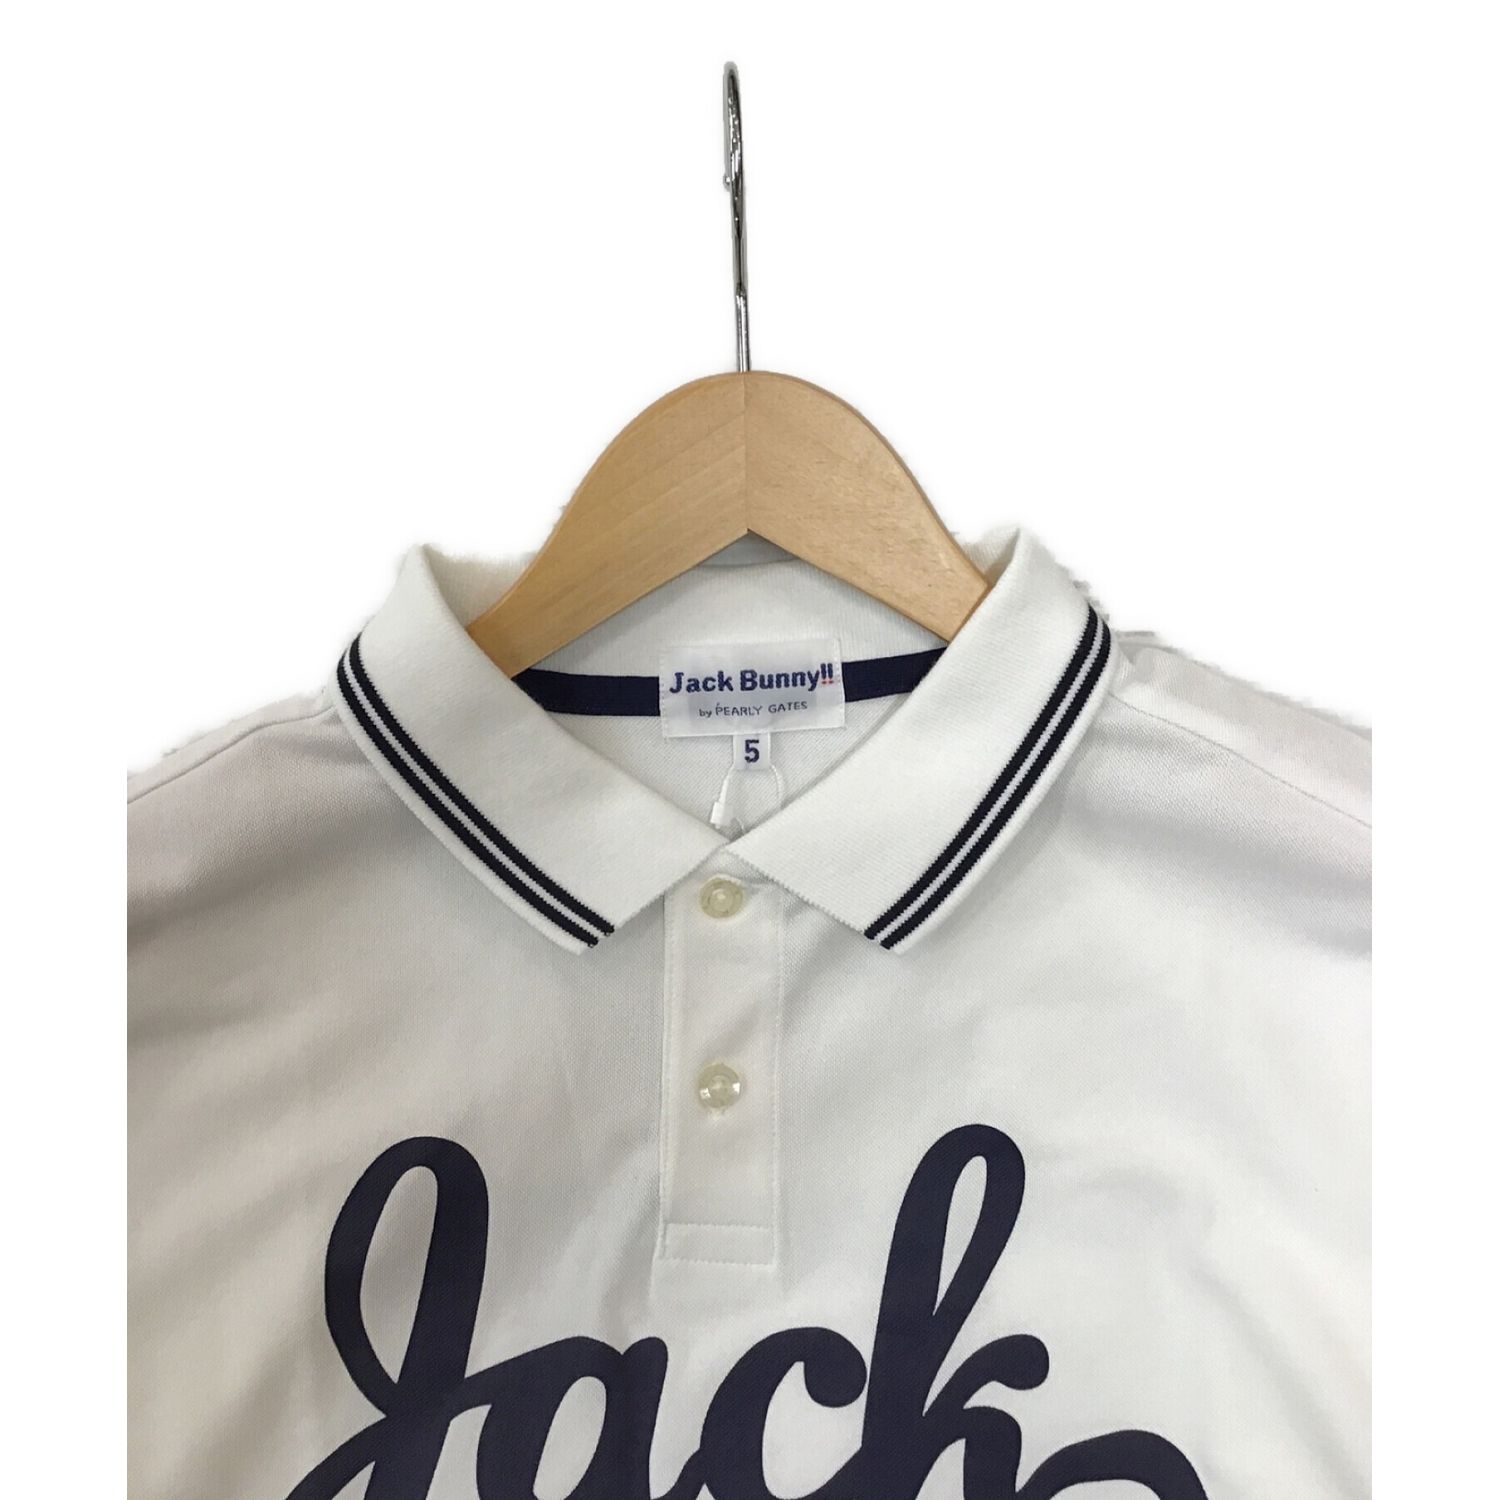 JACK BUNNY (ジャックバニー) ゴルフウェア(トップス) メンズ SIZE L ホワイト 半袖ポロシャツ フロントロゴ  262-6260600｜トレファクONLINE